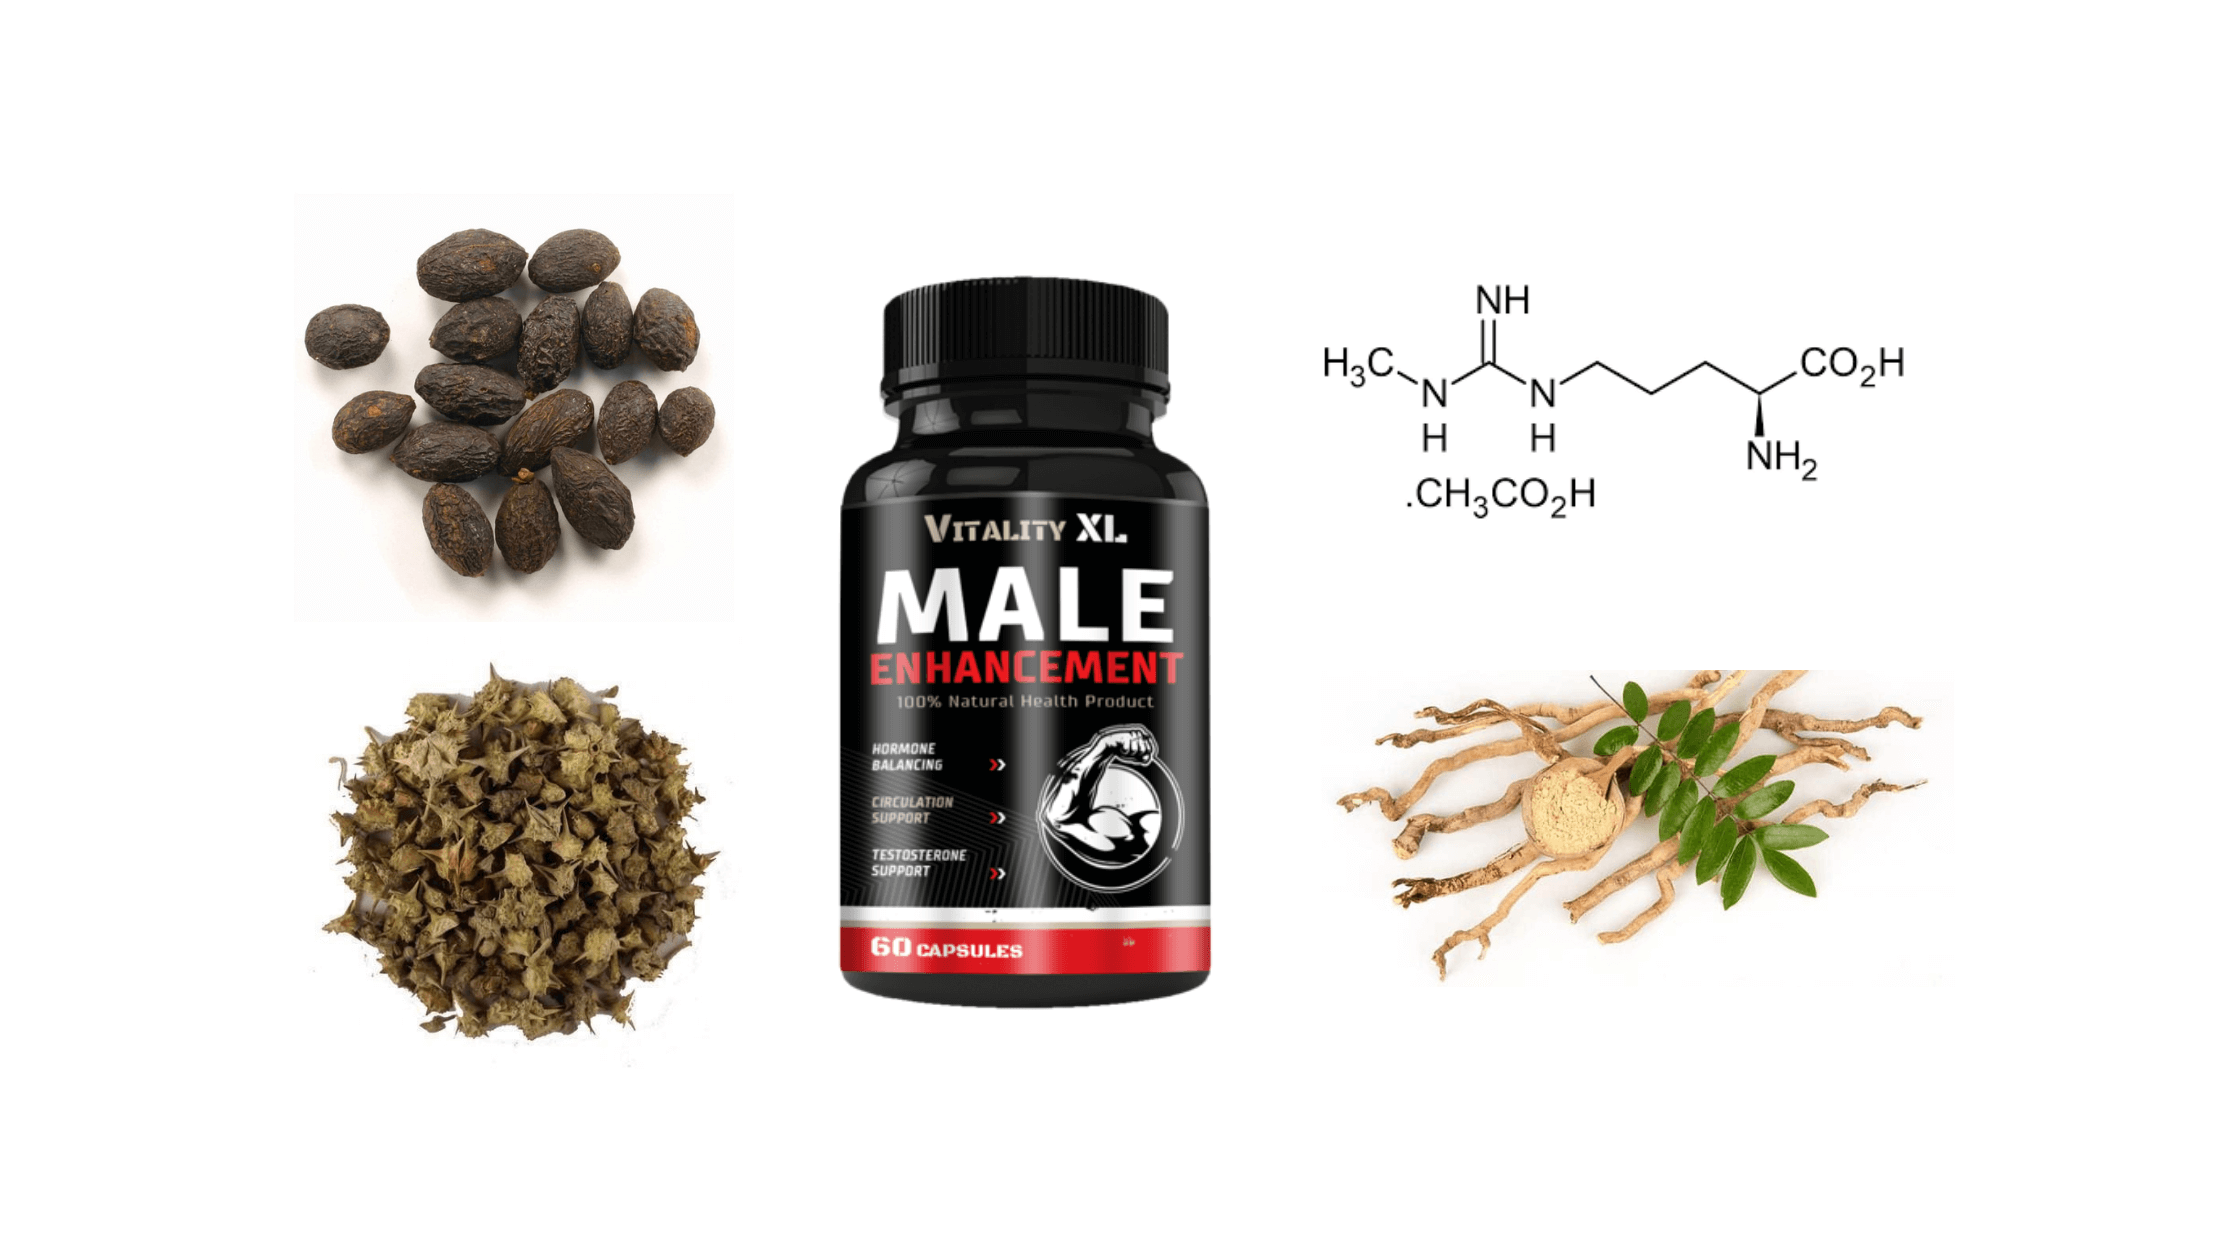 Vitality XL Male Enhancement capsule Ingredients